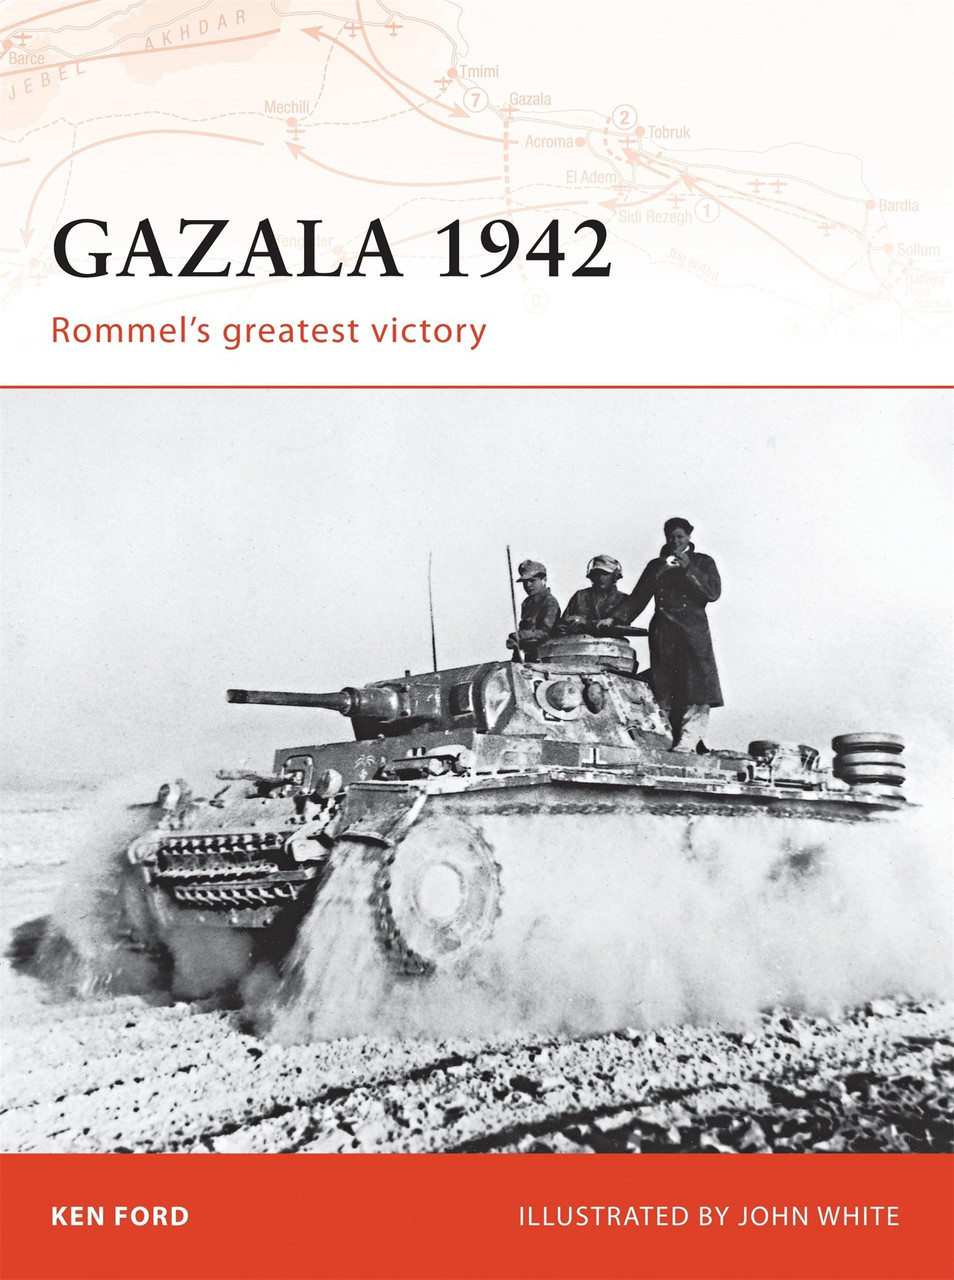 CAM196 - Gazala 1942: Rommel's Greatest Victory